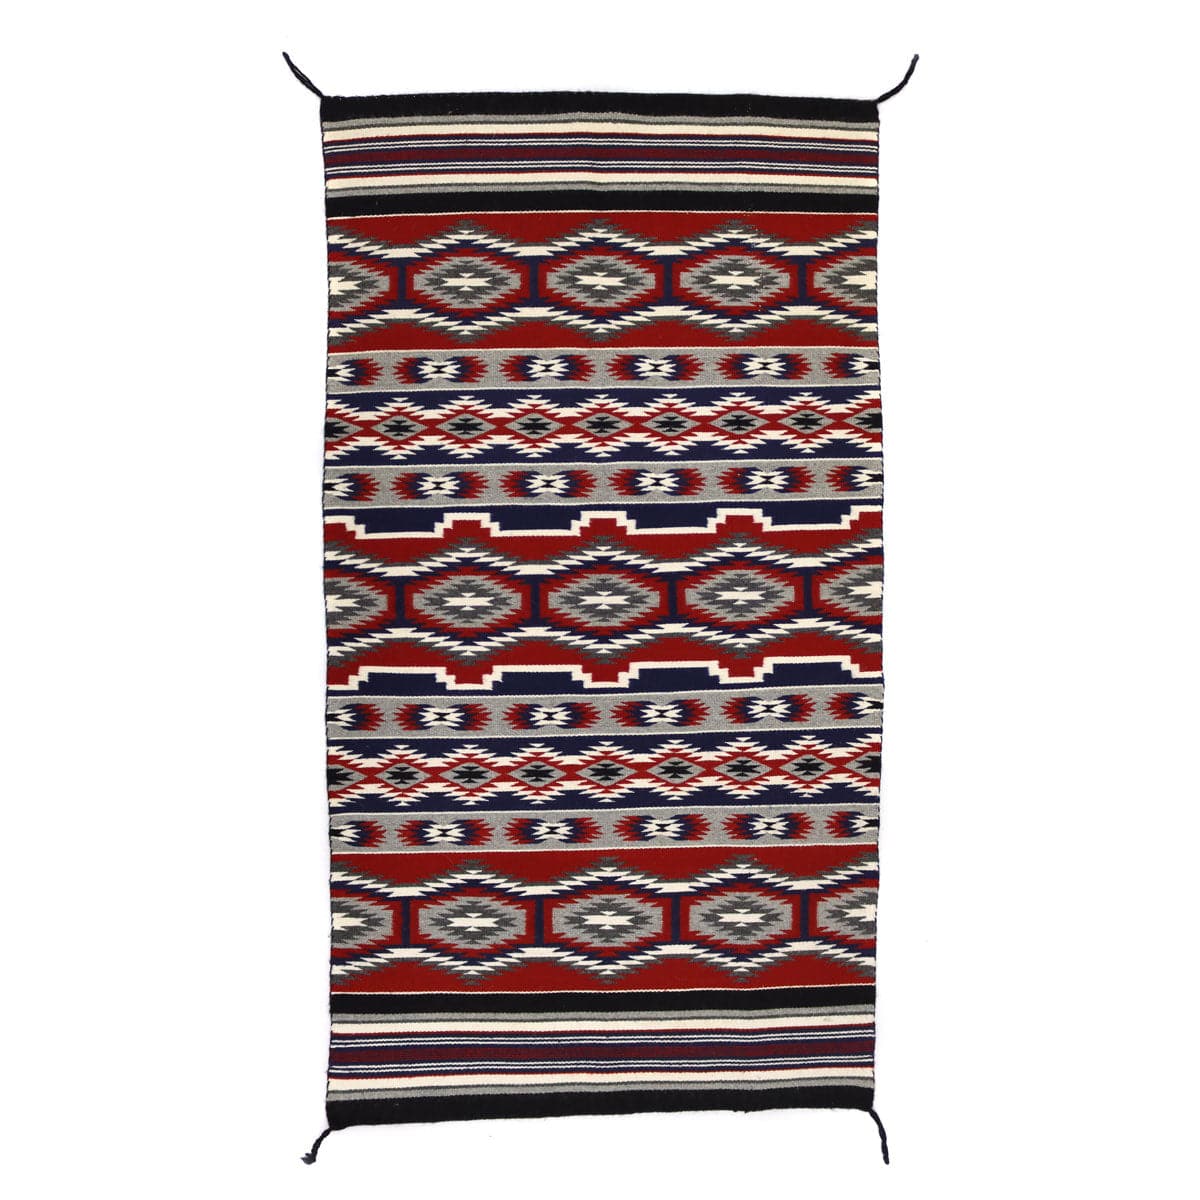 Navajo Contemporary Revival Blanket c. 1980-90s, 55.5" x 29" (T91051-0821-008)3